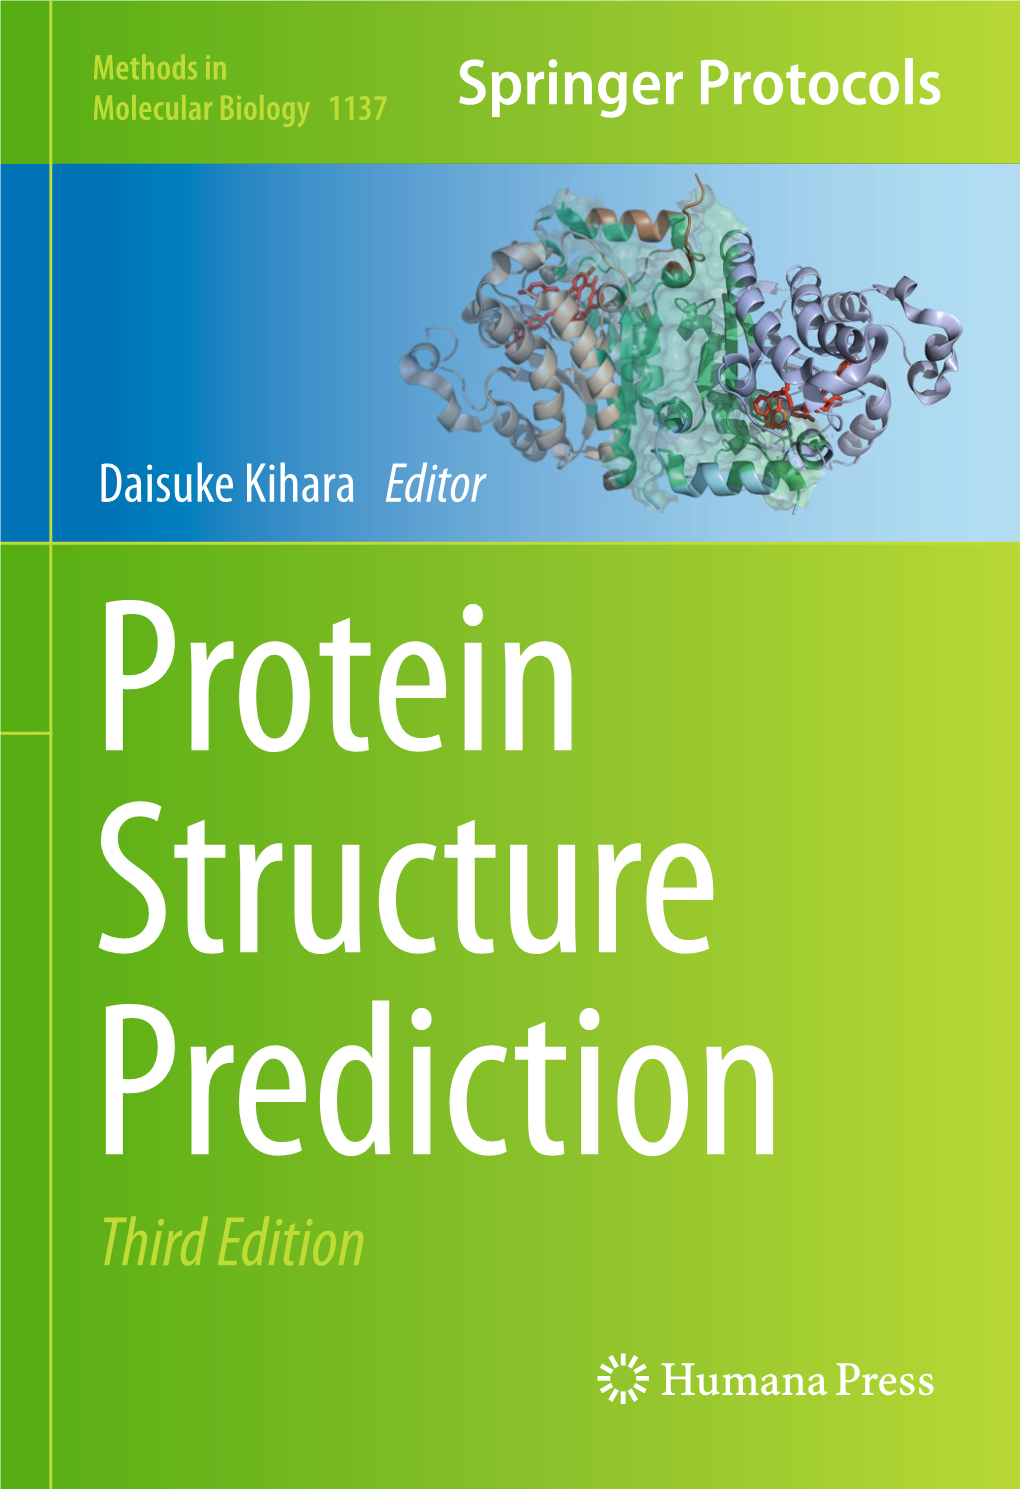 Daisuke Kihara Editor Protein Structure Prediction Third Edition M ETHODS in MOLECULAR BIOLOGY